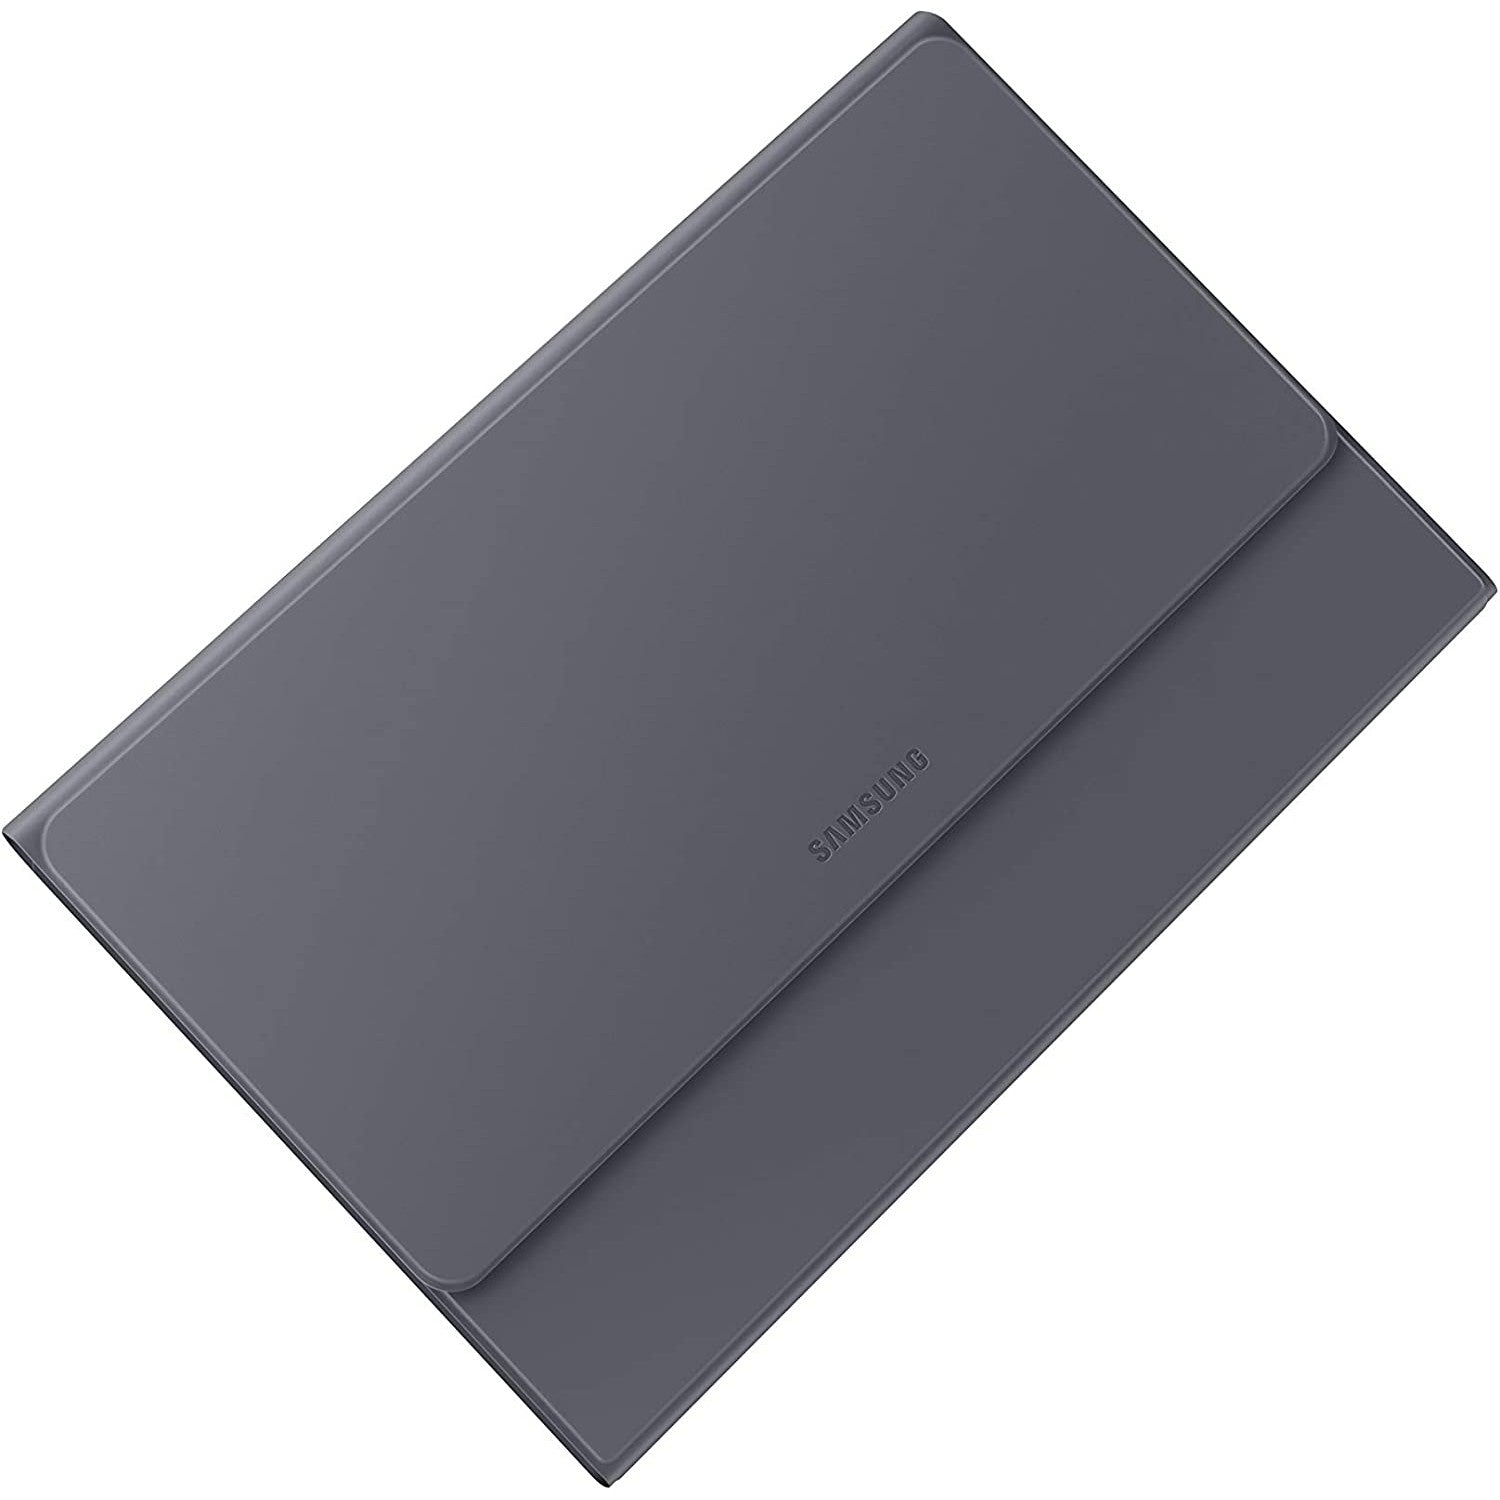 Samsung - EF-DT500UJEGUJ Galaxy Tab A7 Keyboard Cover - Gray